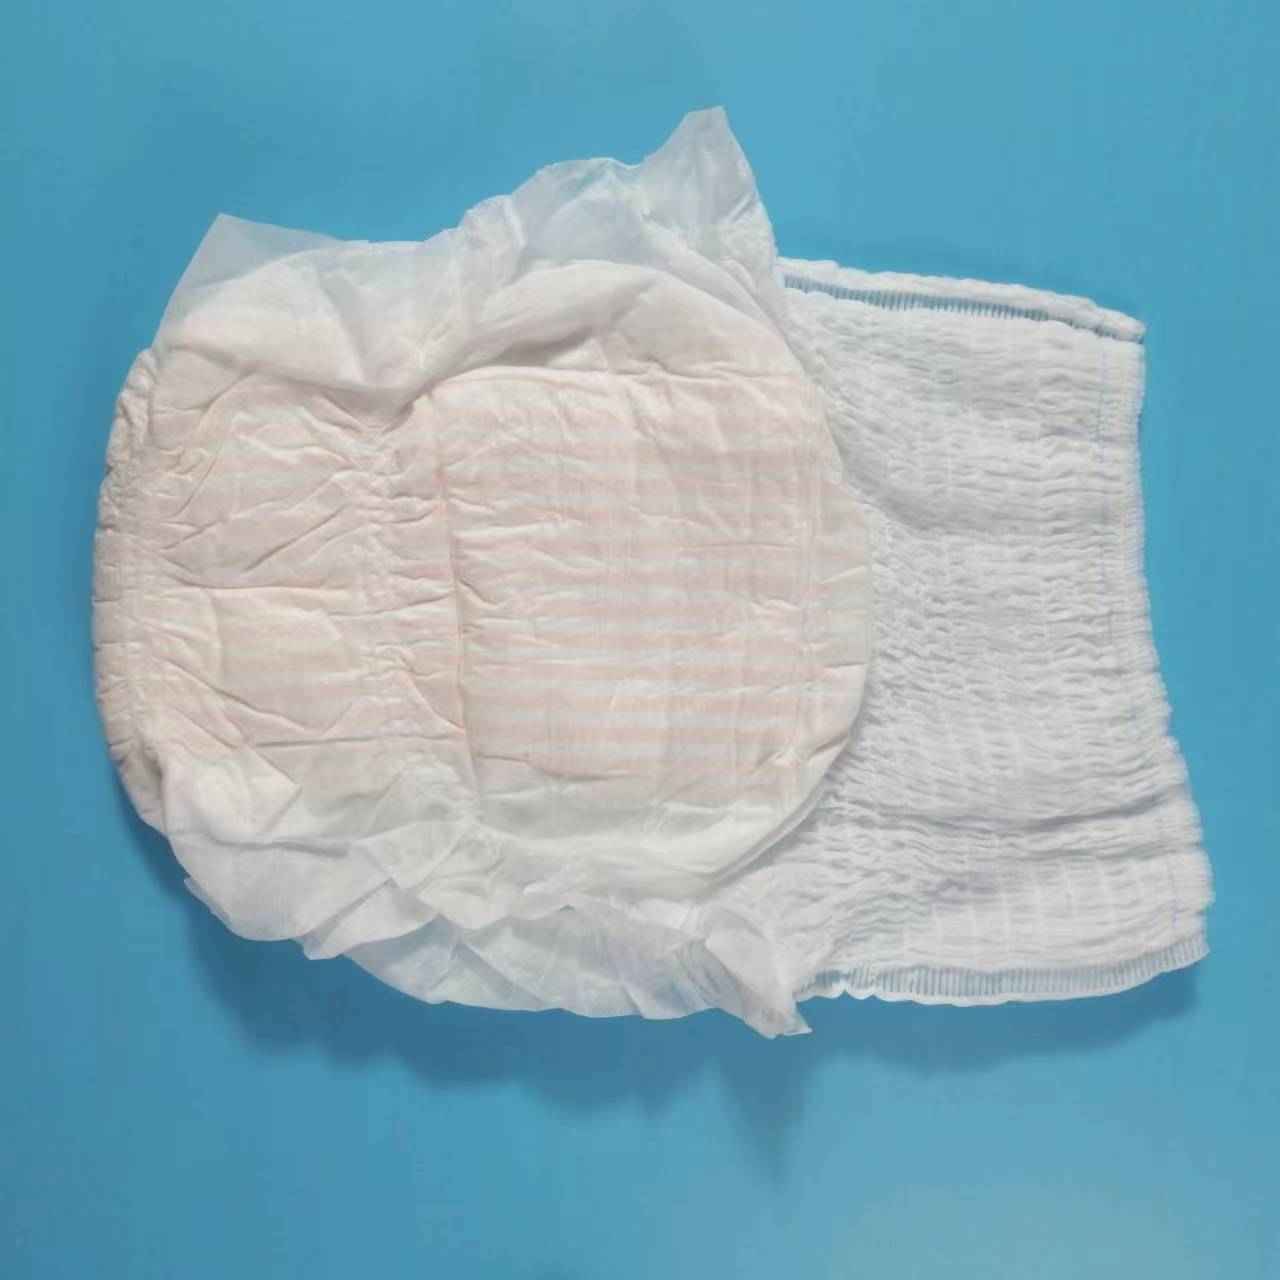 plastic pants adults Patient Adult Diaper Washable Adult Nappy Anti-leak  Period Brief Incontinence Diaper - Walmart.com